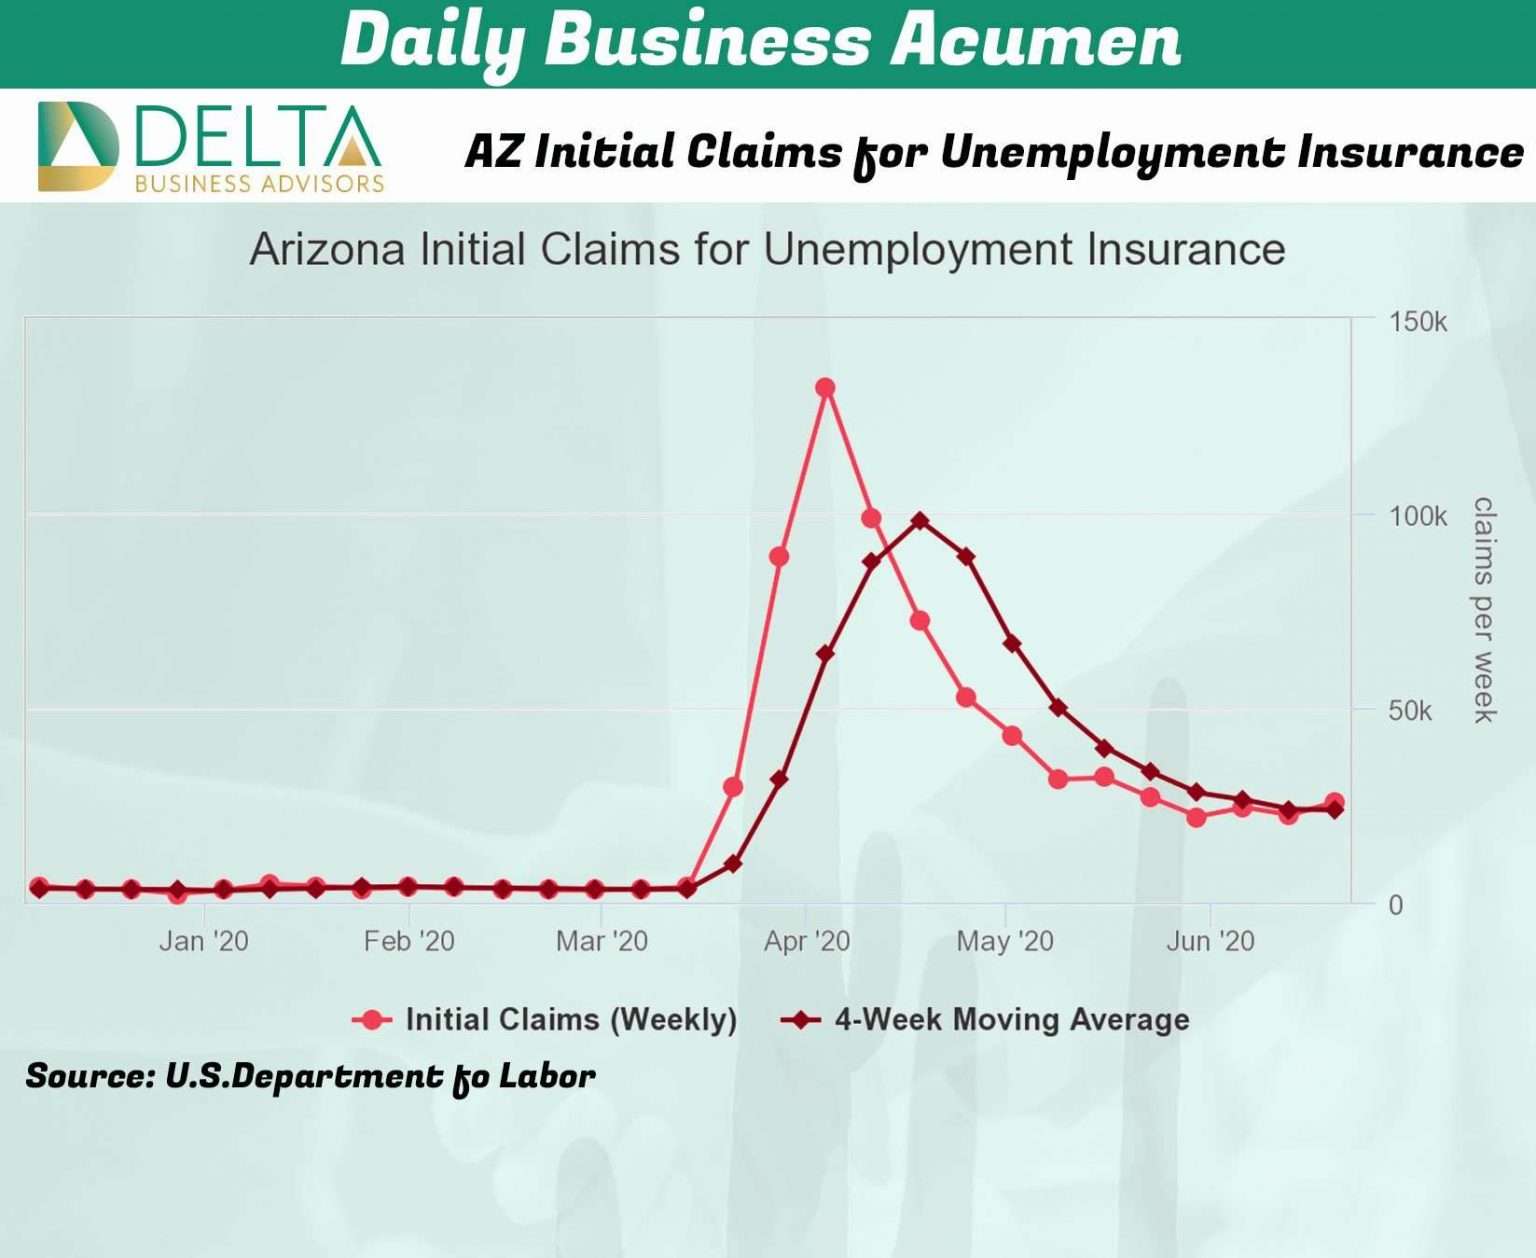 AZ Initial Claims for Unemployment Insurance Delta Business Advisors